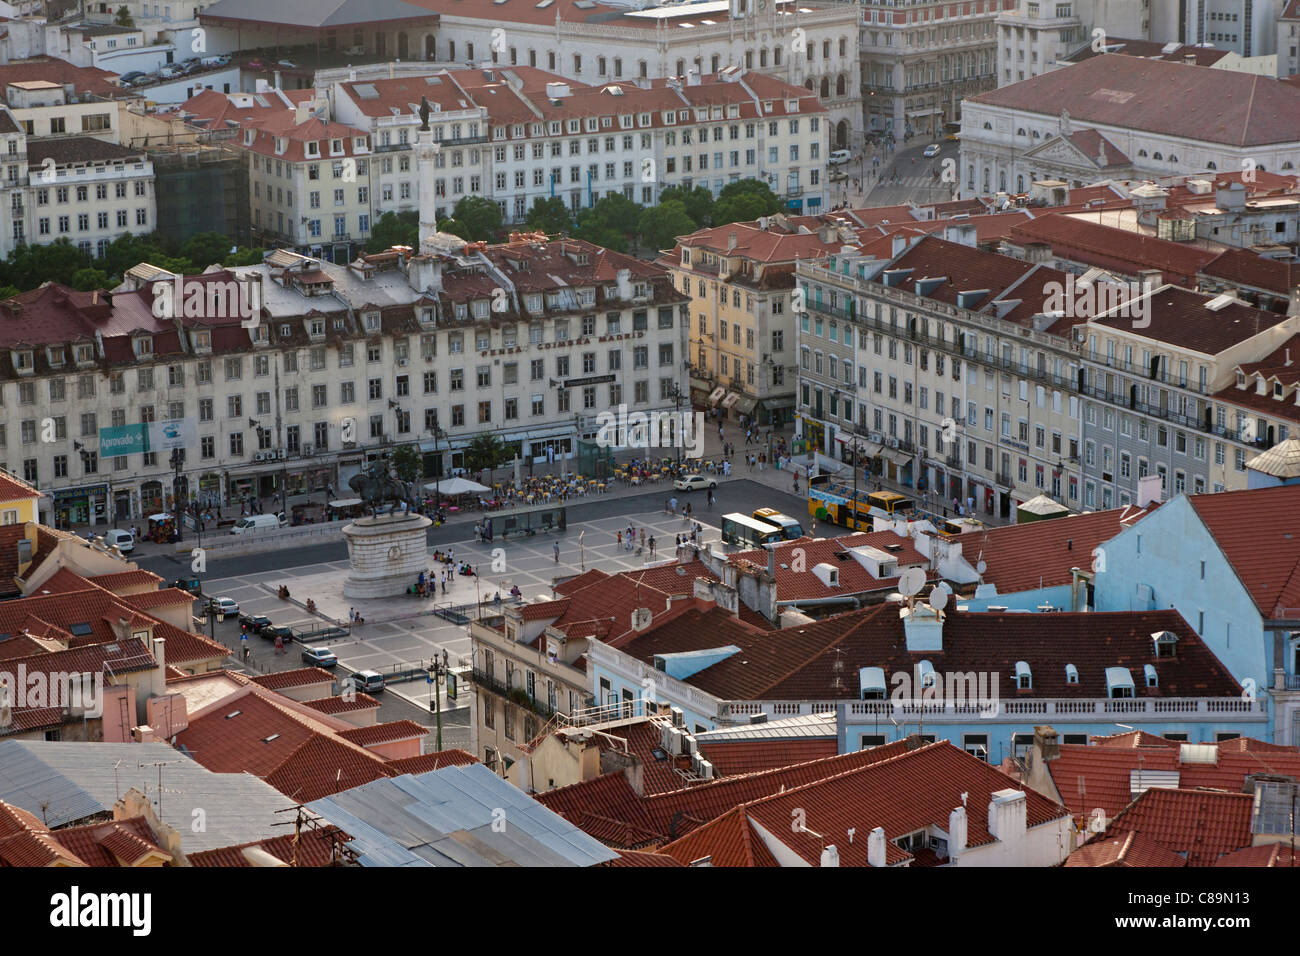 Europe, Portugal, Lisbon, Baixa, View of city with Equestrian statue of King Dom Joao I and Praca da Figueira square Stock Photo